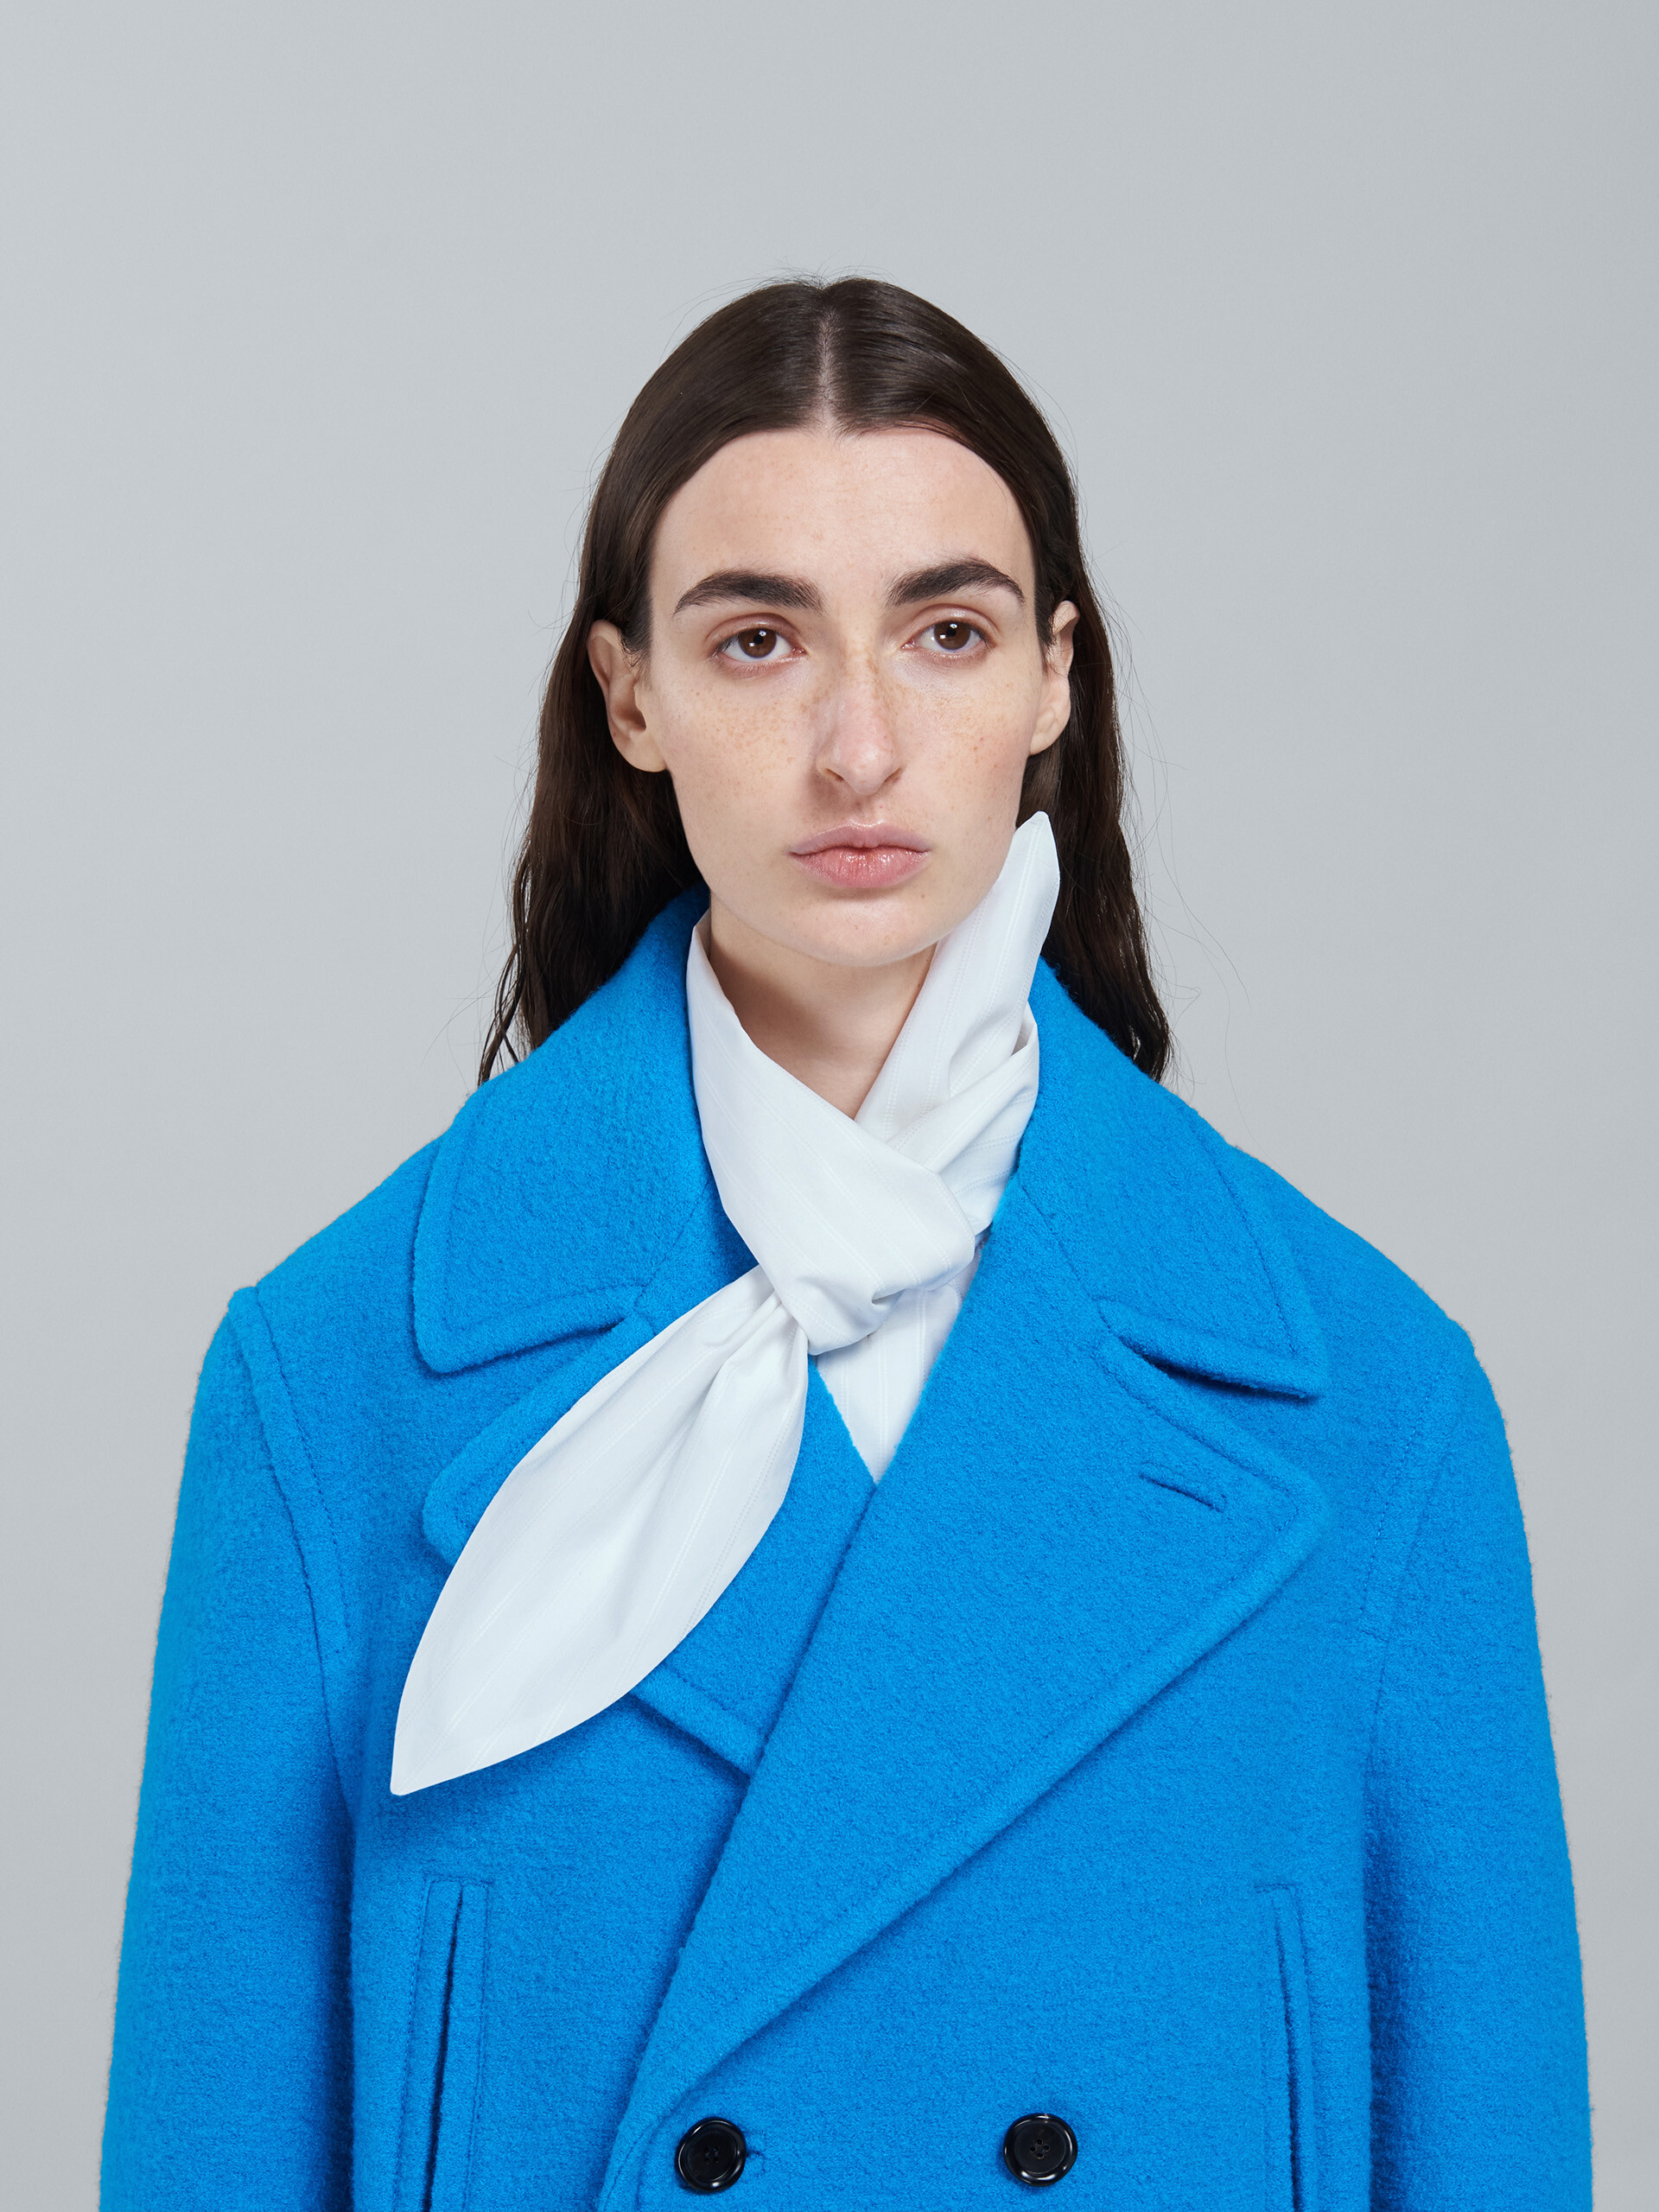 Giacca lunga in lana bouclé blu - Cappotti - Image 4